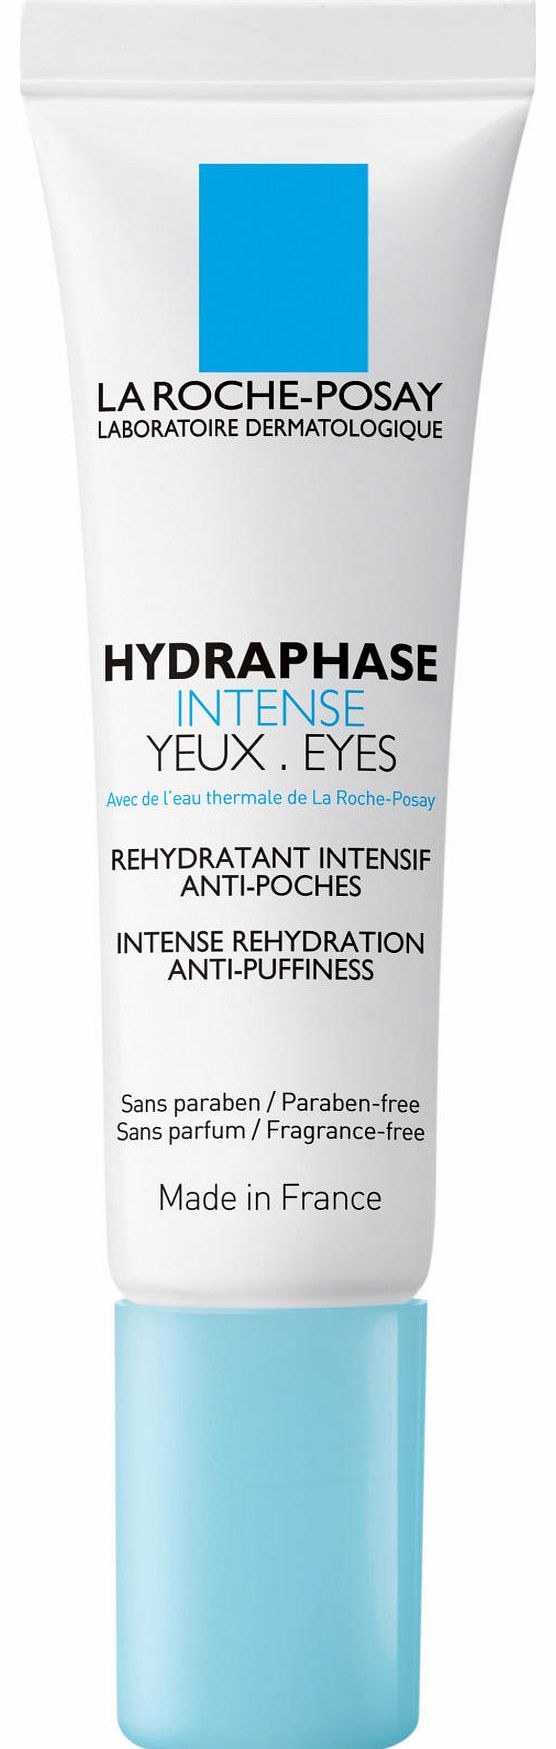 La Roche-Posay Hydraphase Intense Eyes